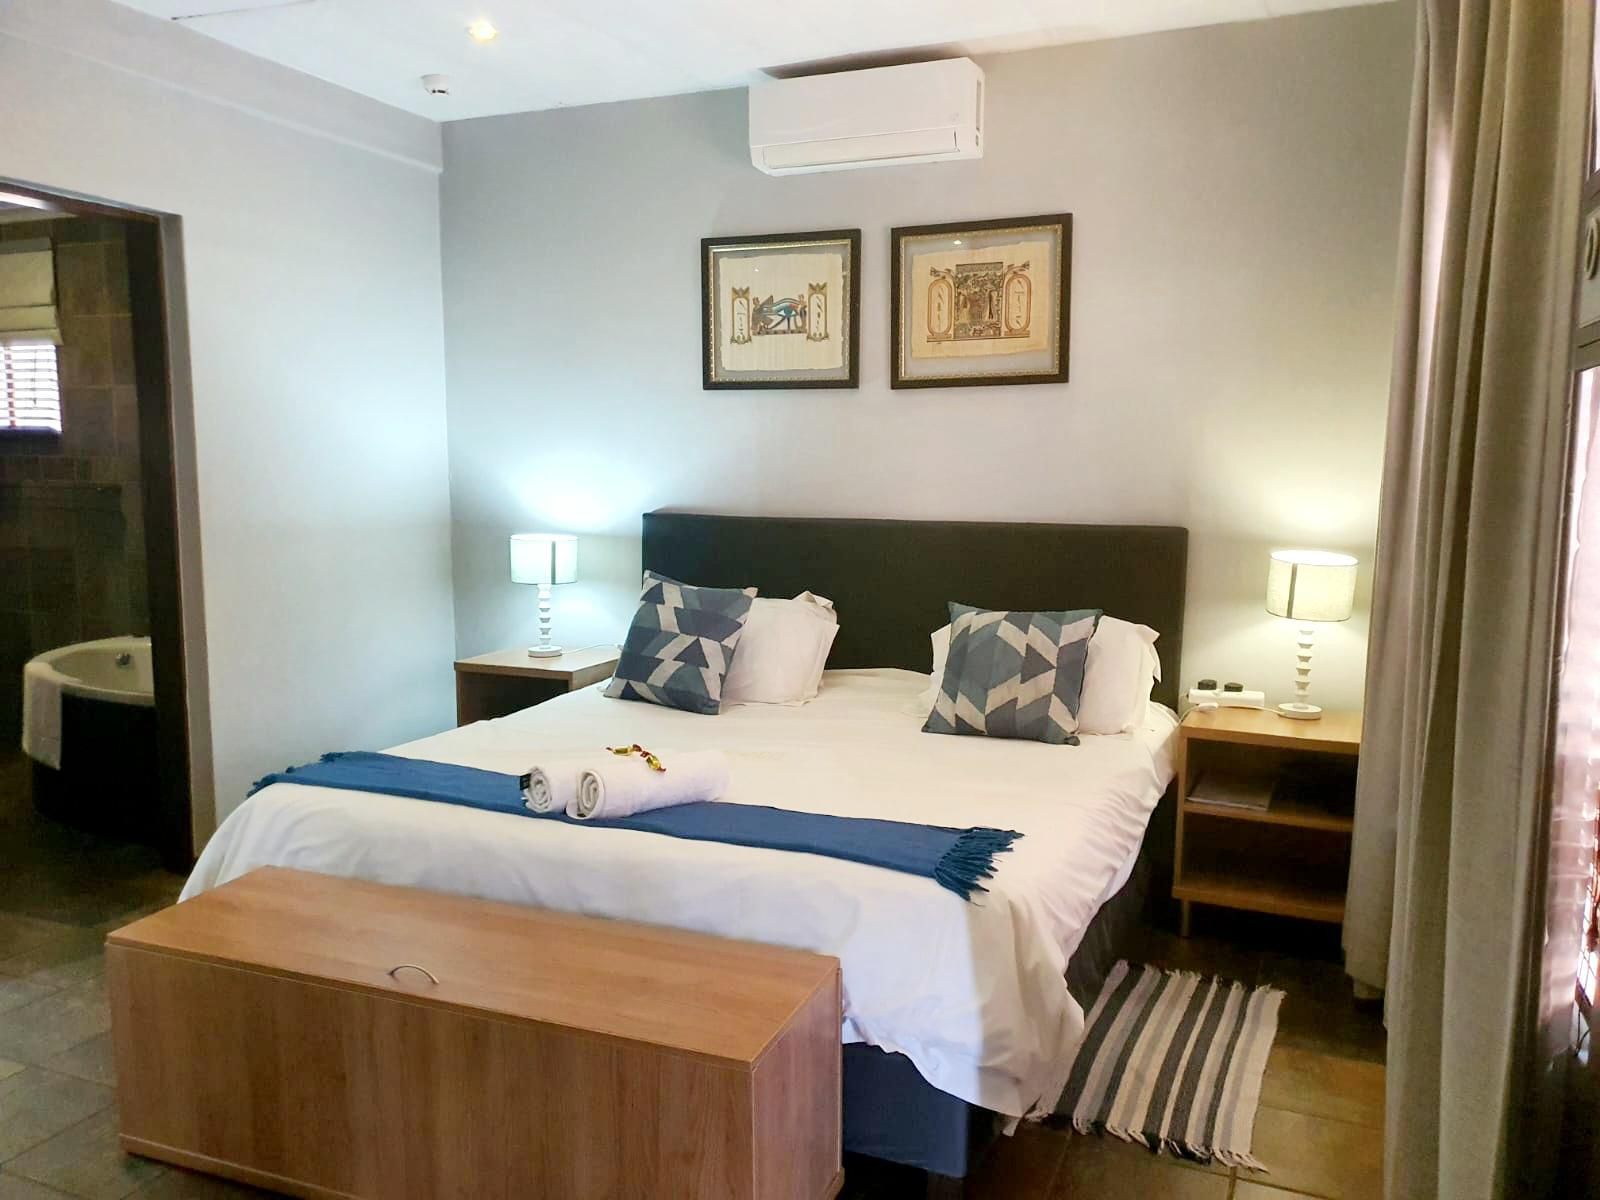 Magalies Mountain Lodge And Spa Kameeldrift West Pretoria Tshwane Gauteng South Africa Bedroom